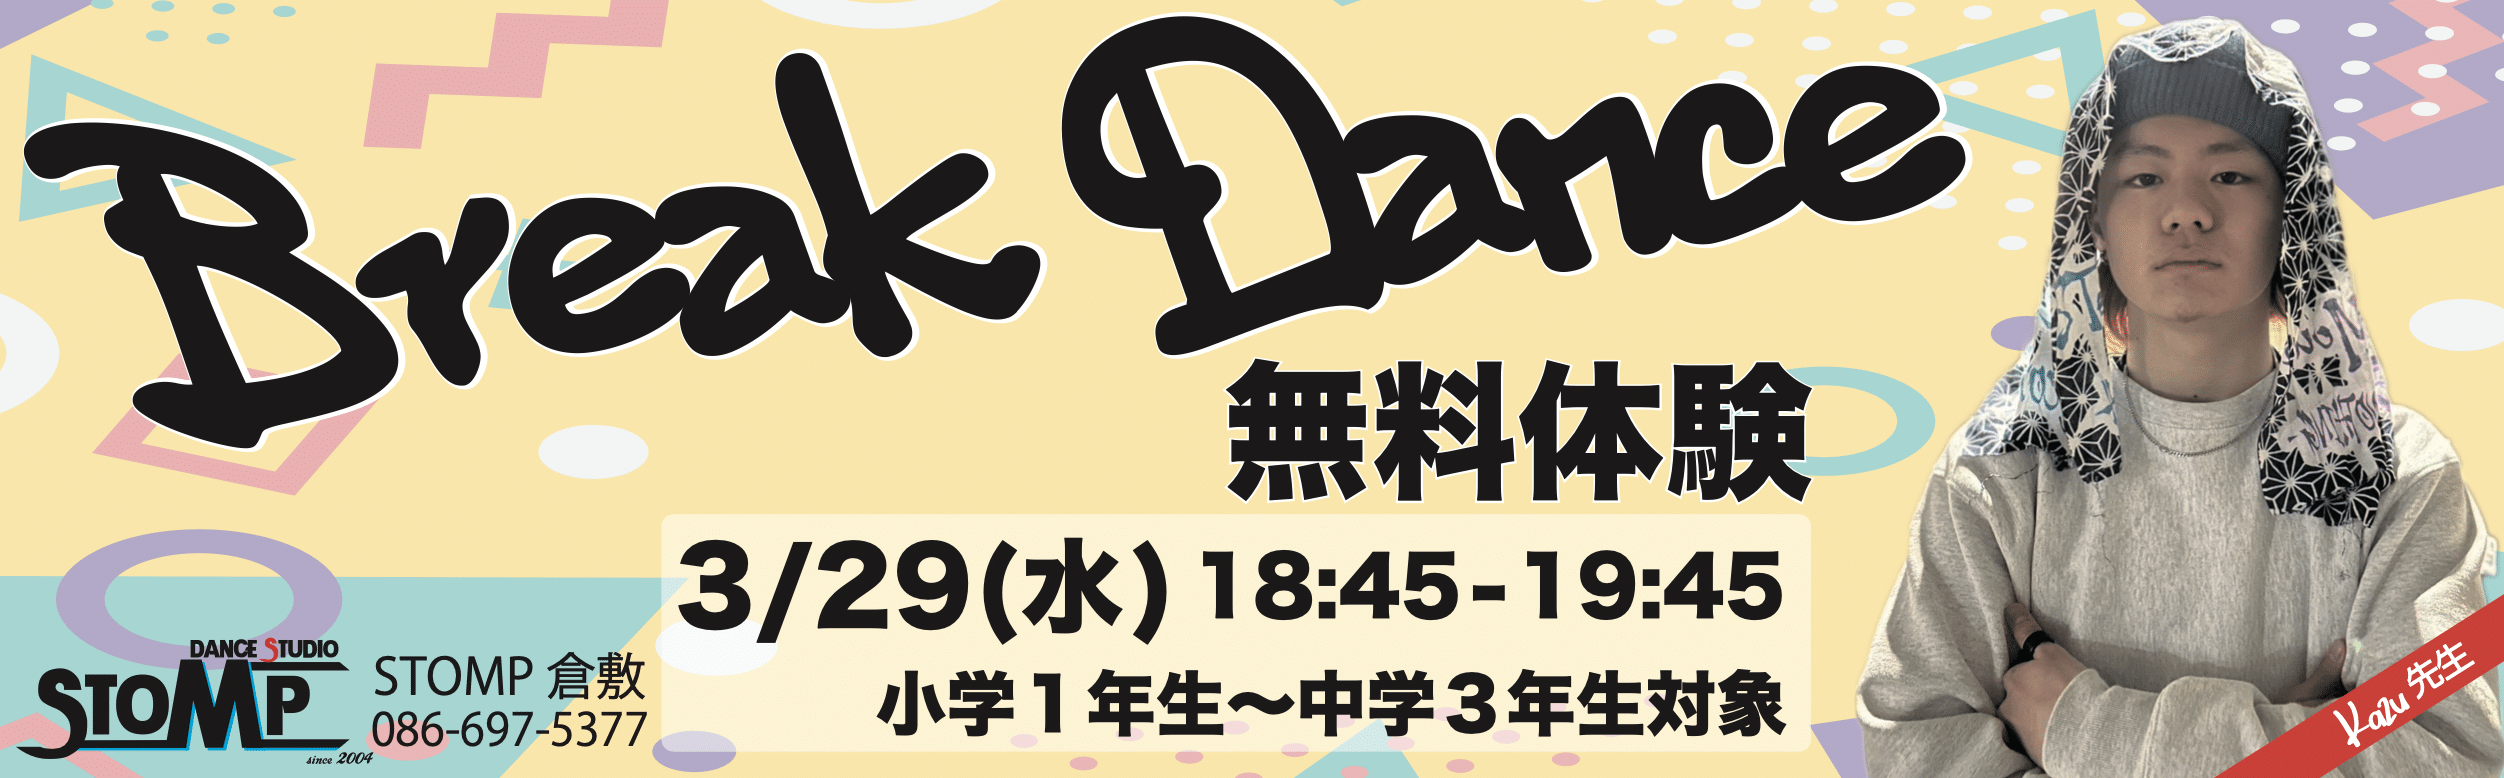 DANCE STUDIO STOMP 倉敷店1